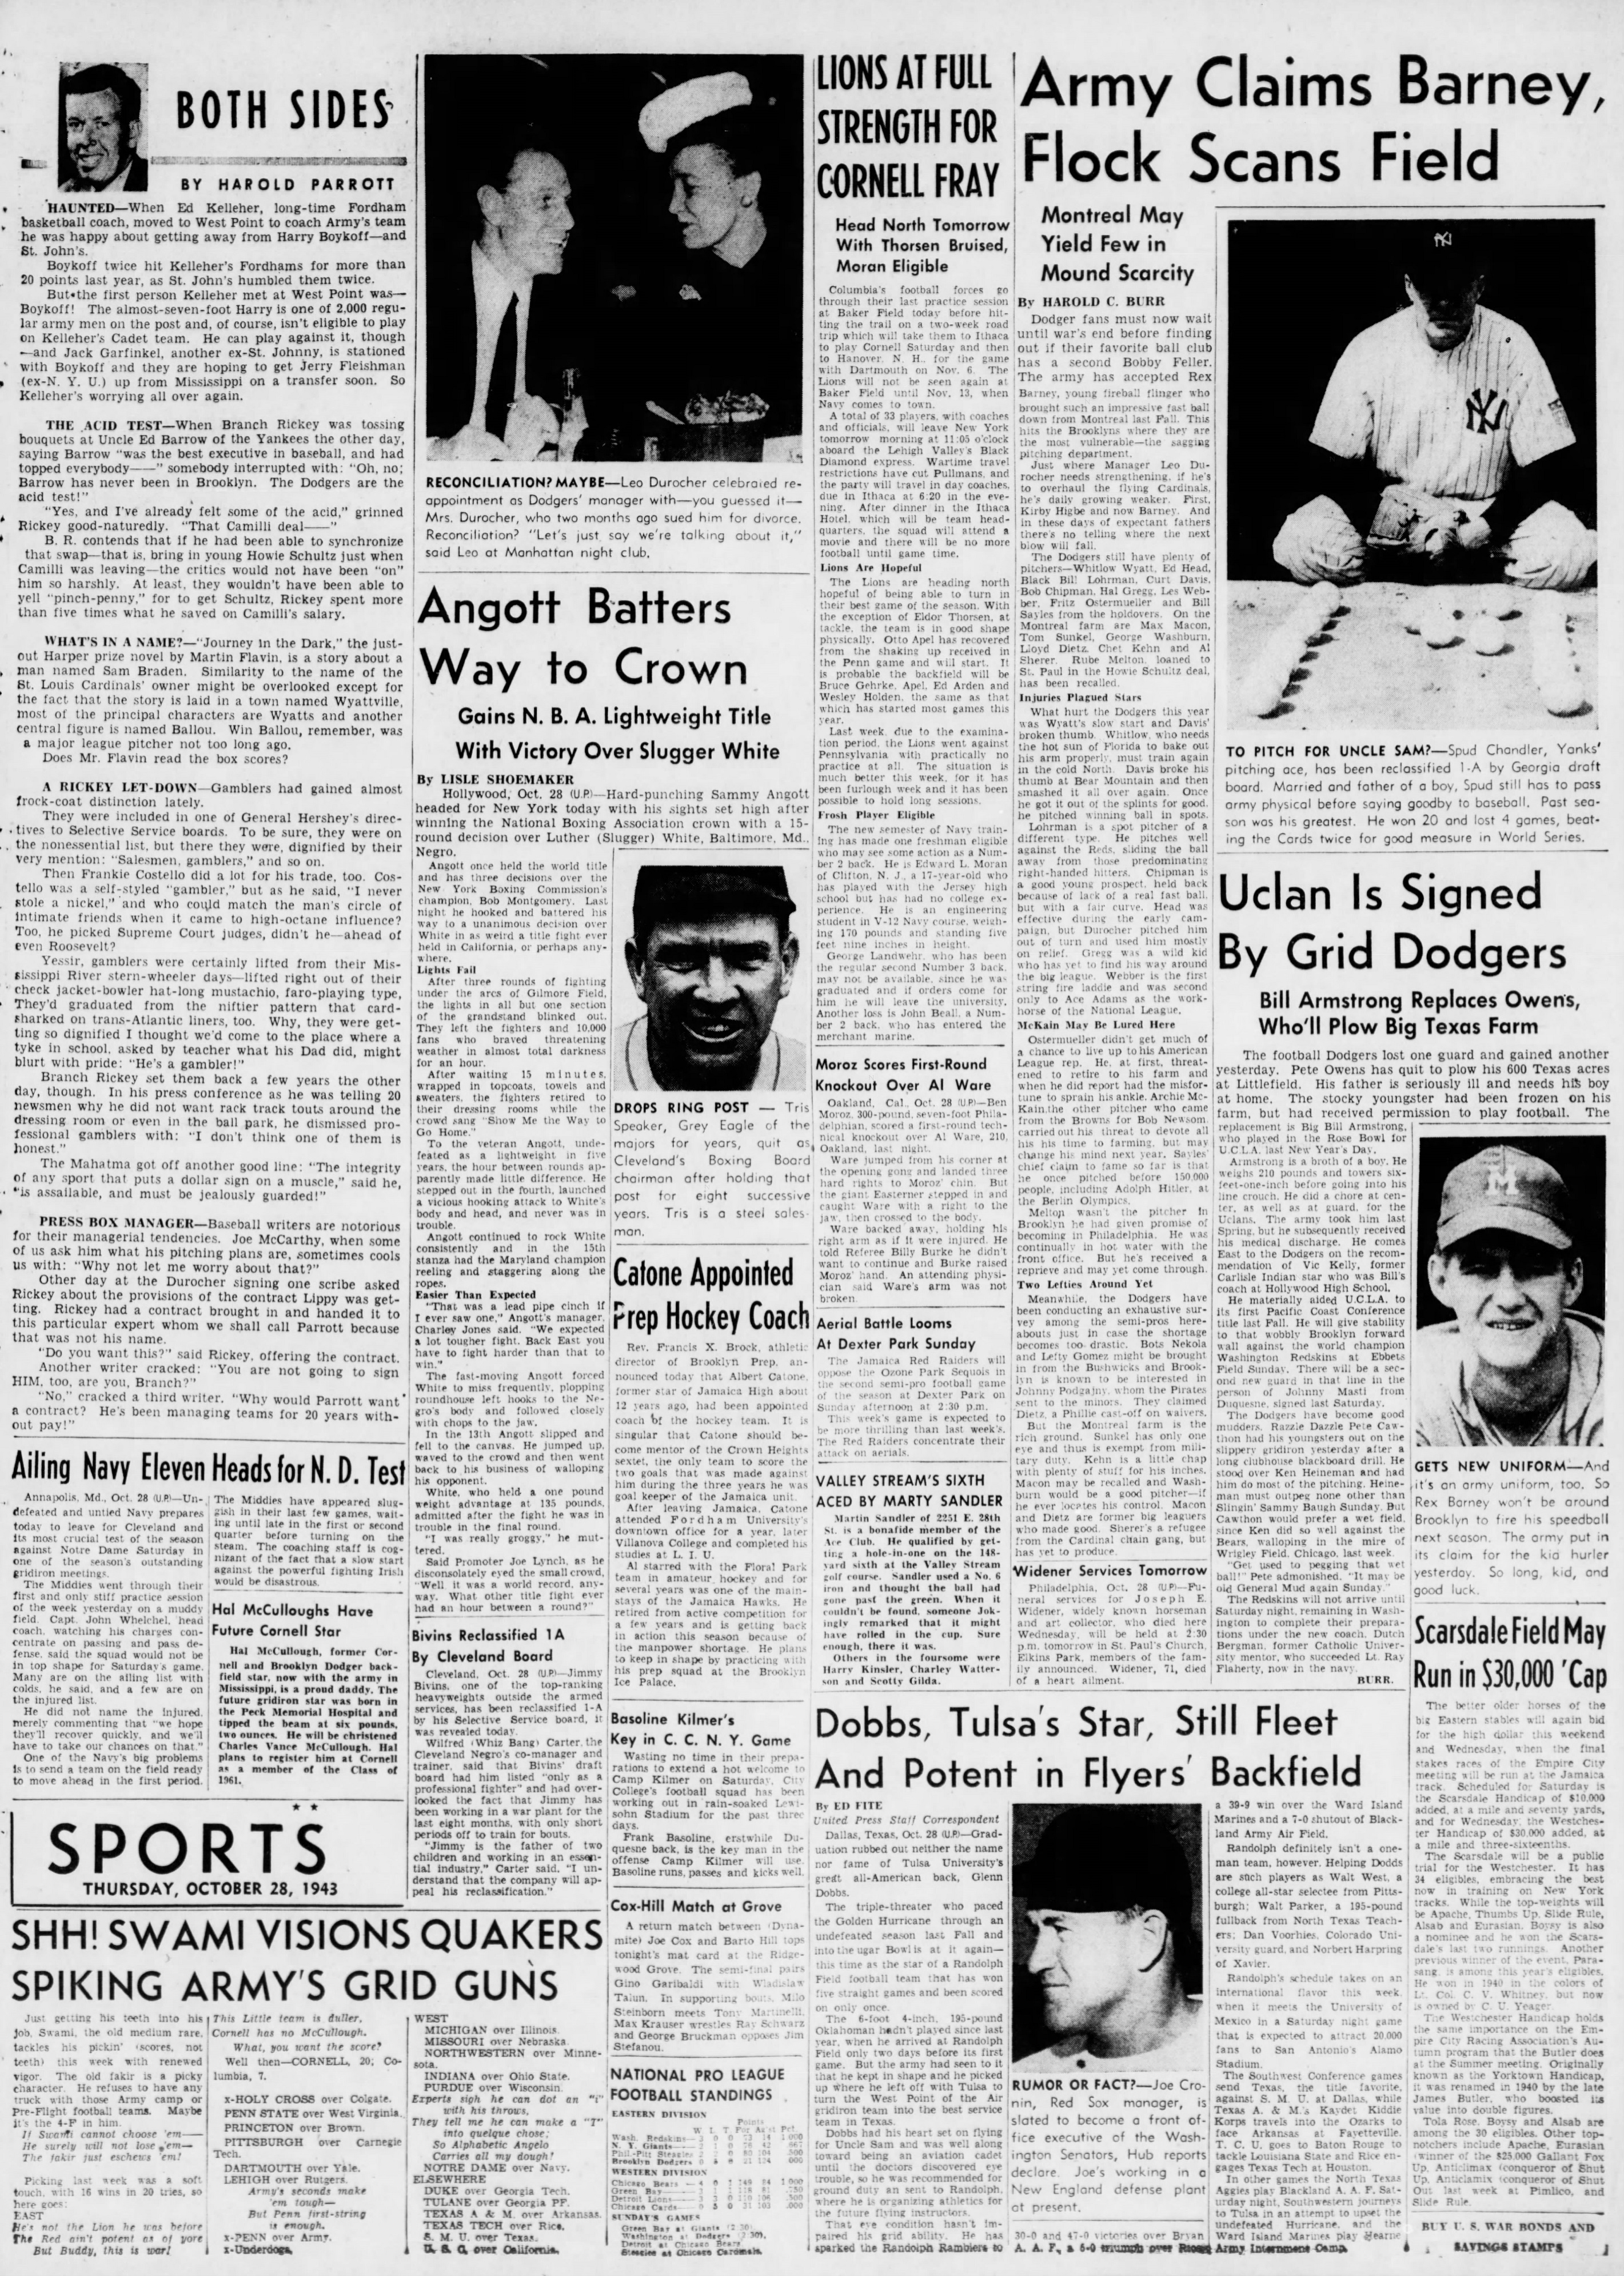 The_Brooklyn_Daily_Eagle_Thu__Oct_28__1943_.jpg